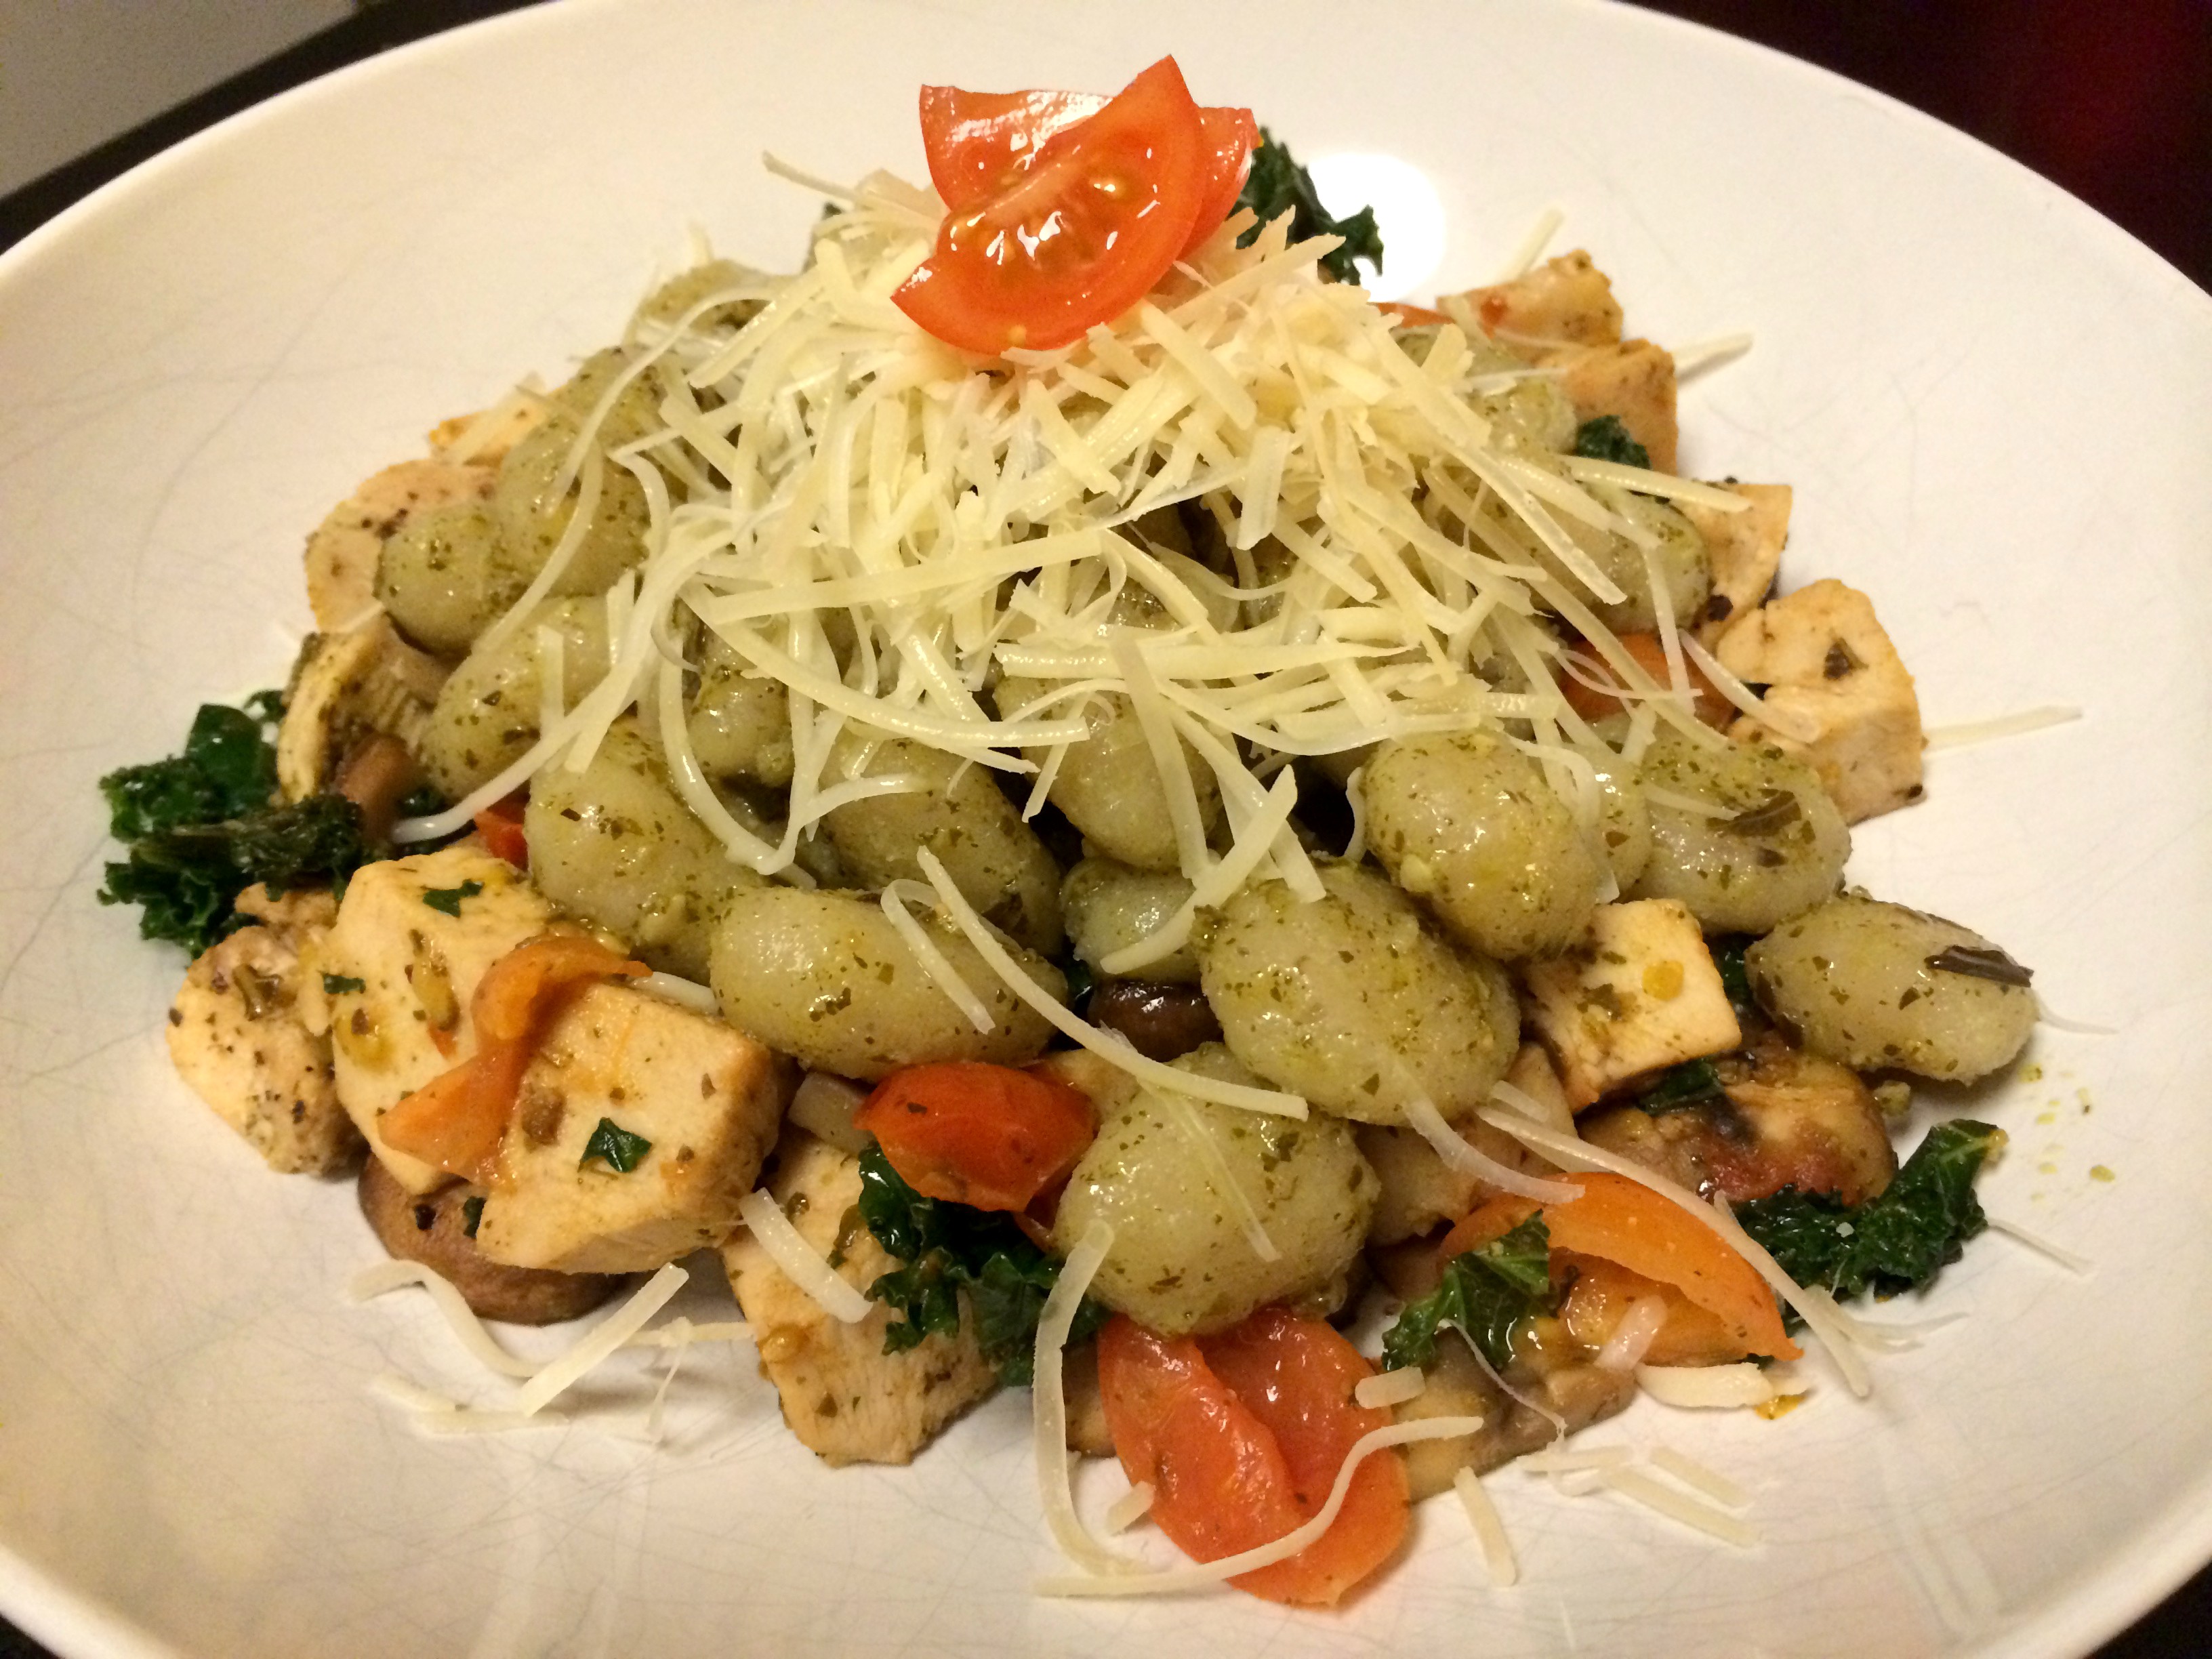 Pesto Gnocchi with Mushrooms and Kale